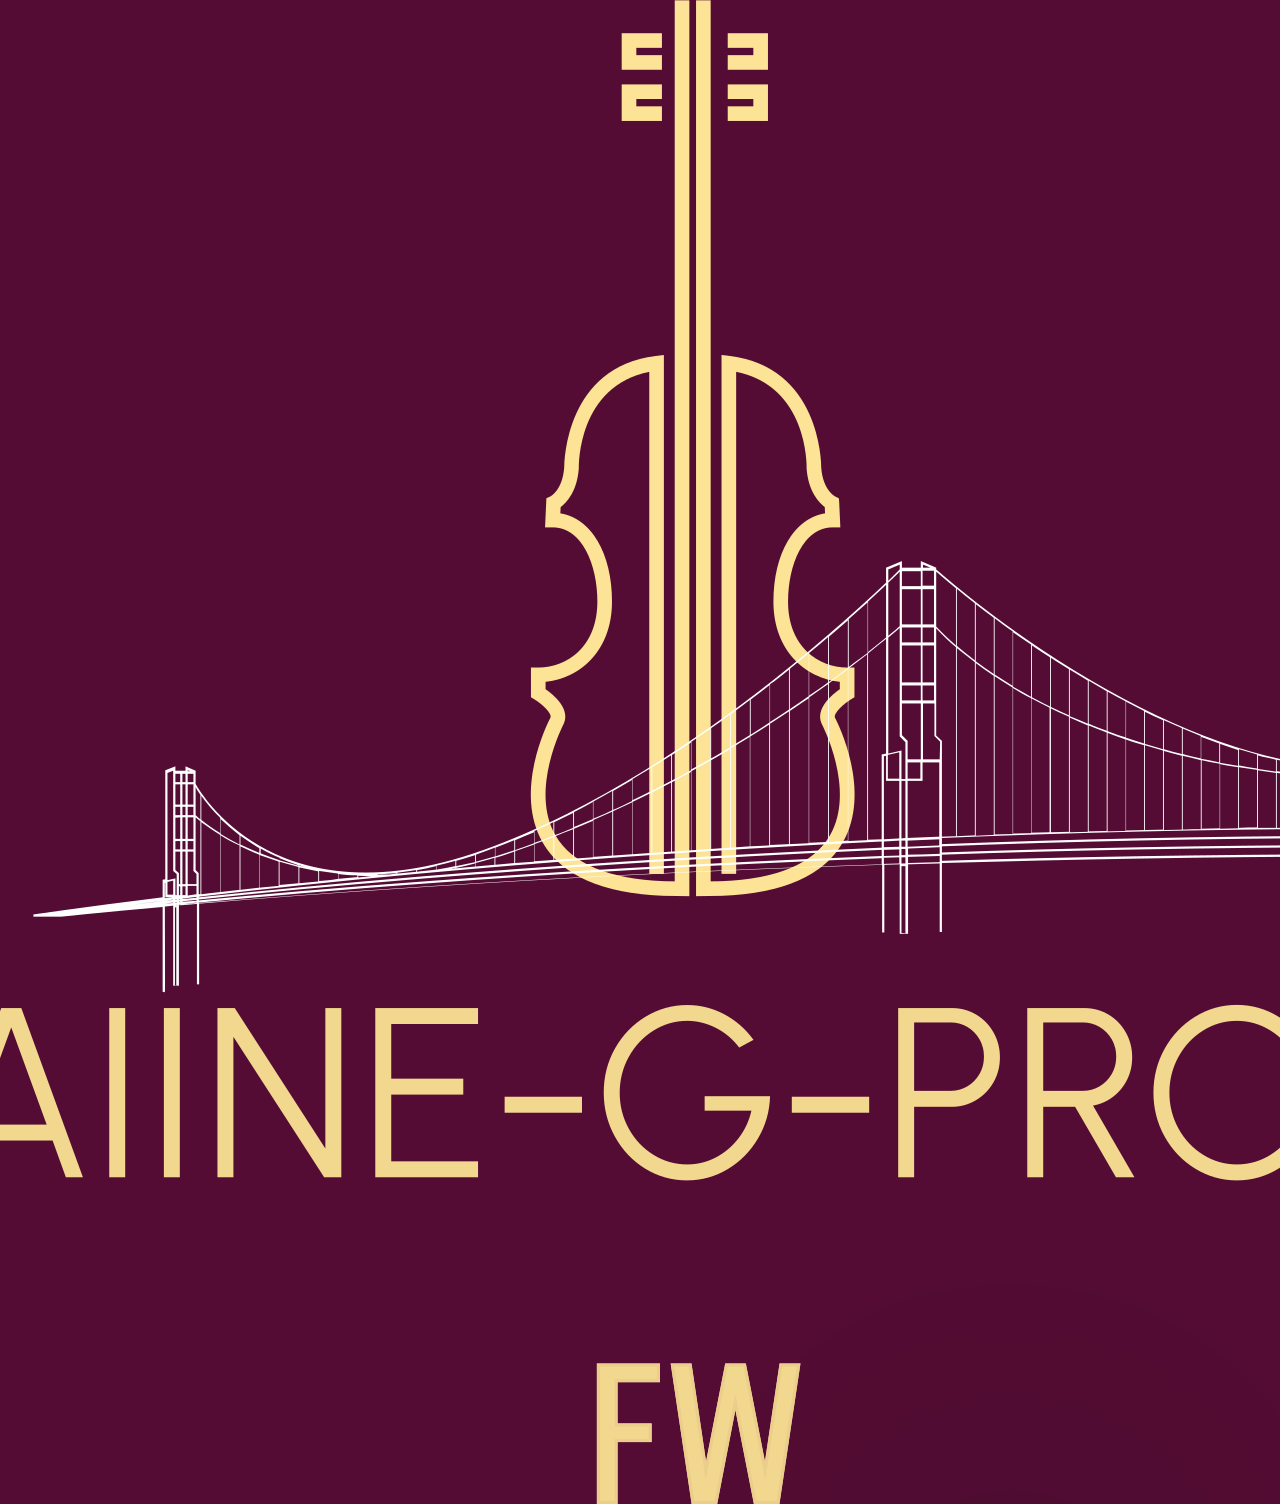 Naiine-G-Prod's web page